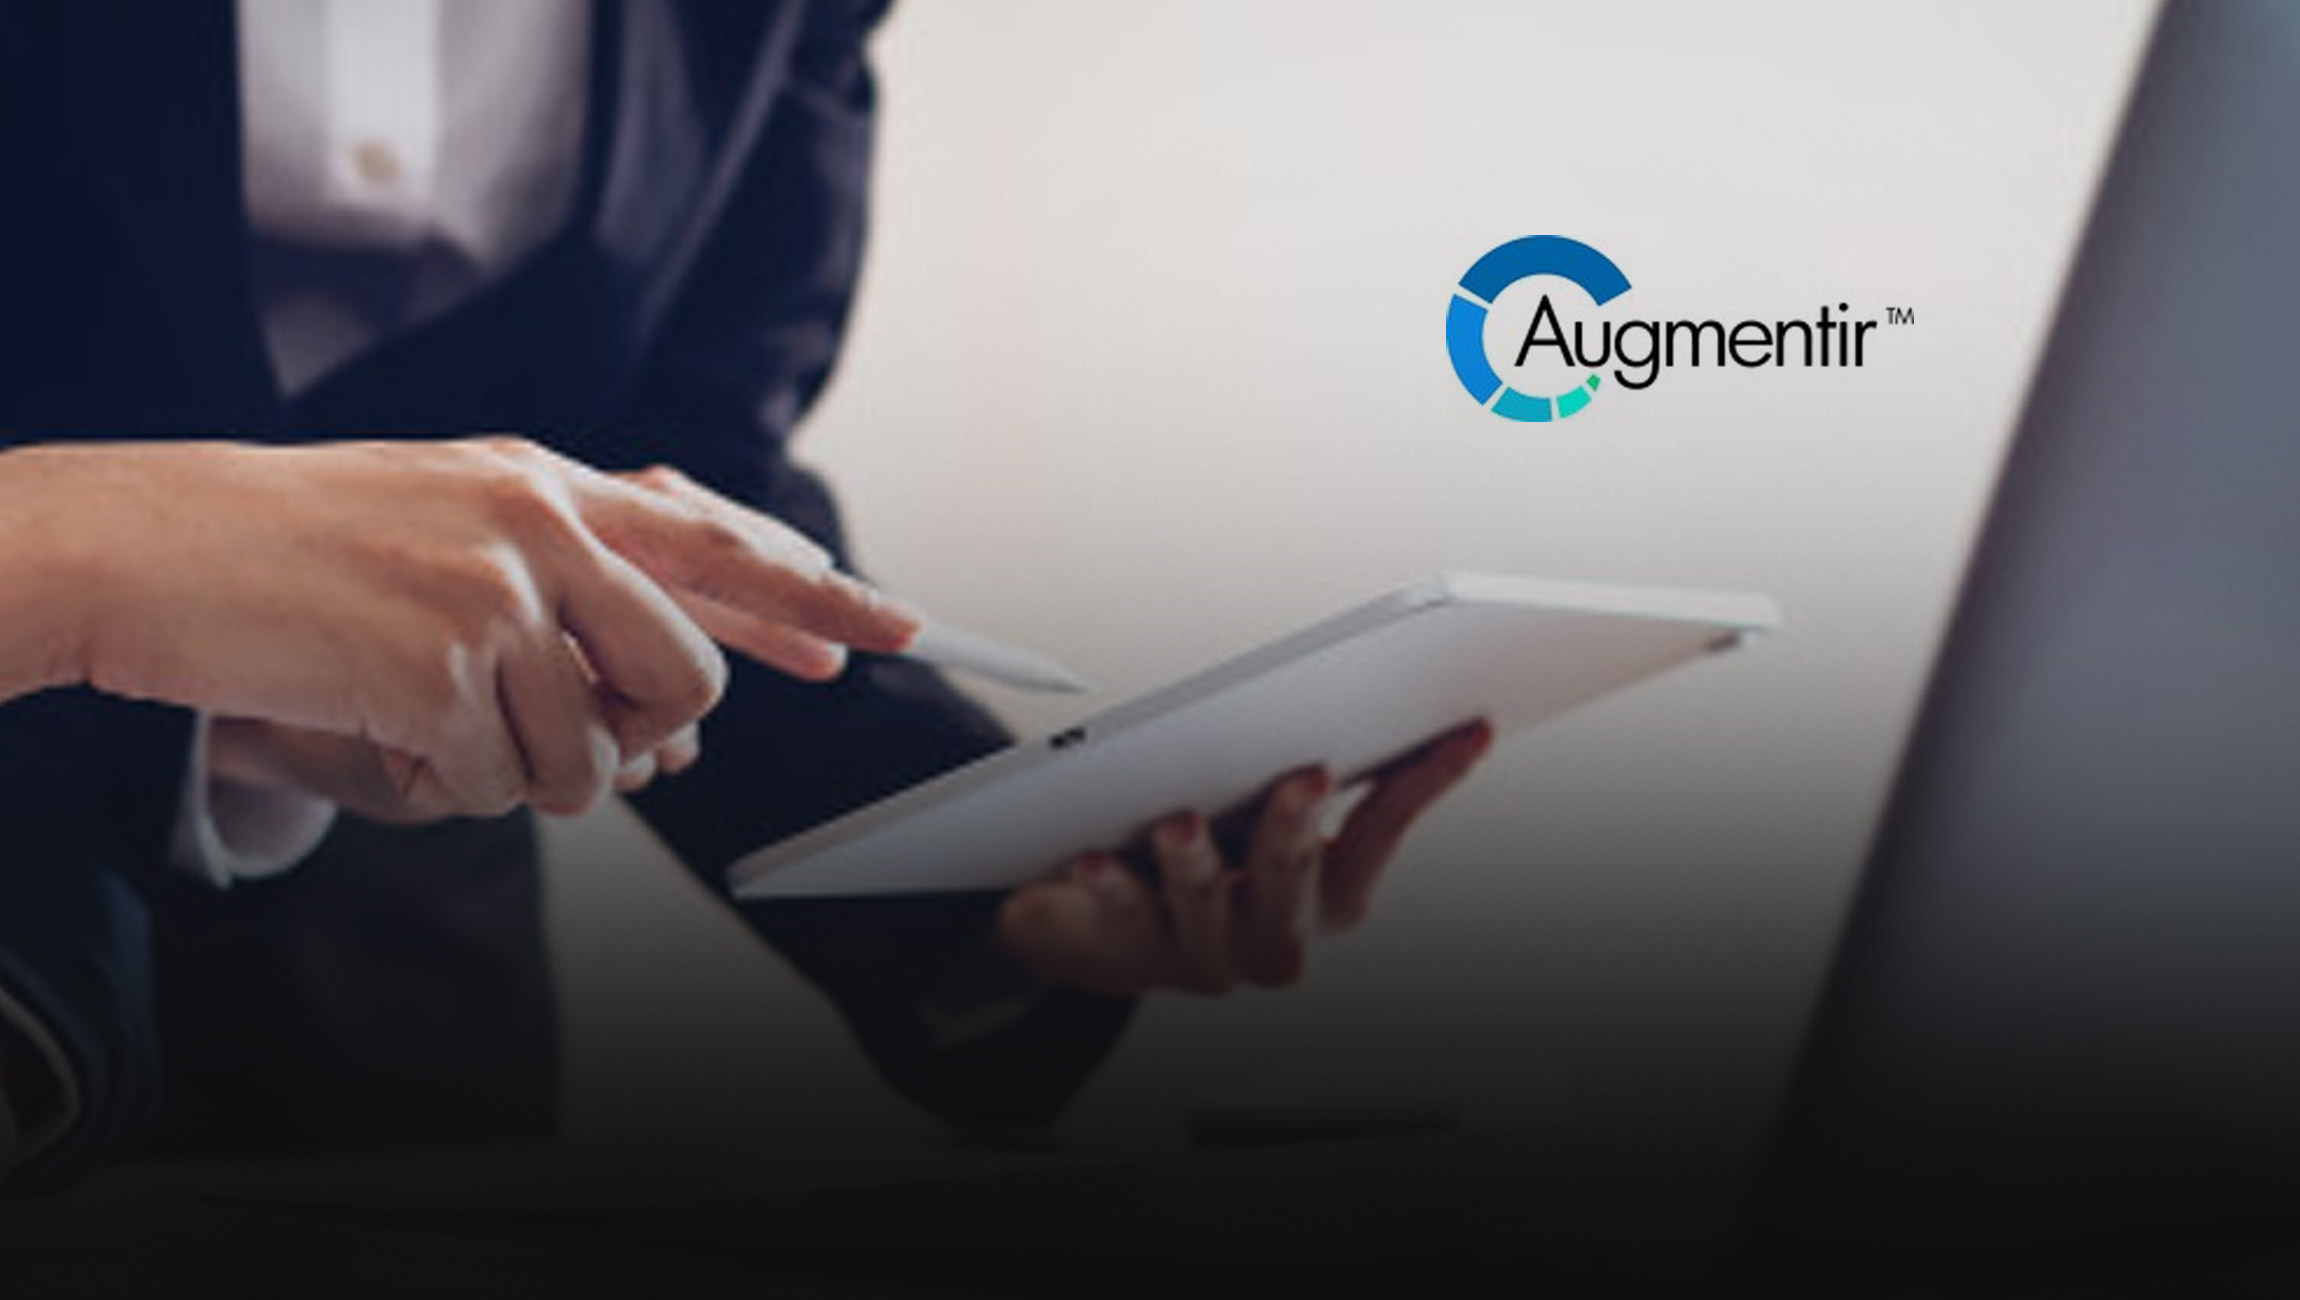 Augmentir Announces Comprehensive Connected Worker Subscription